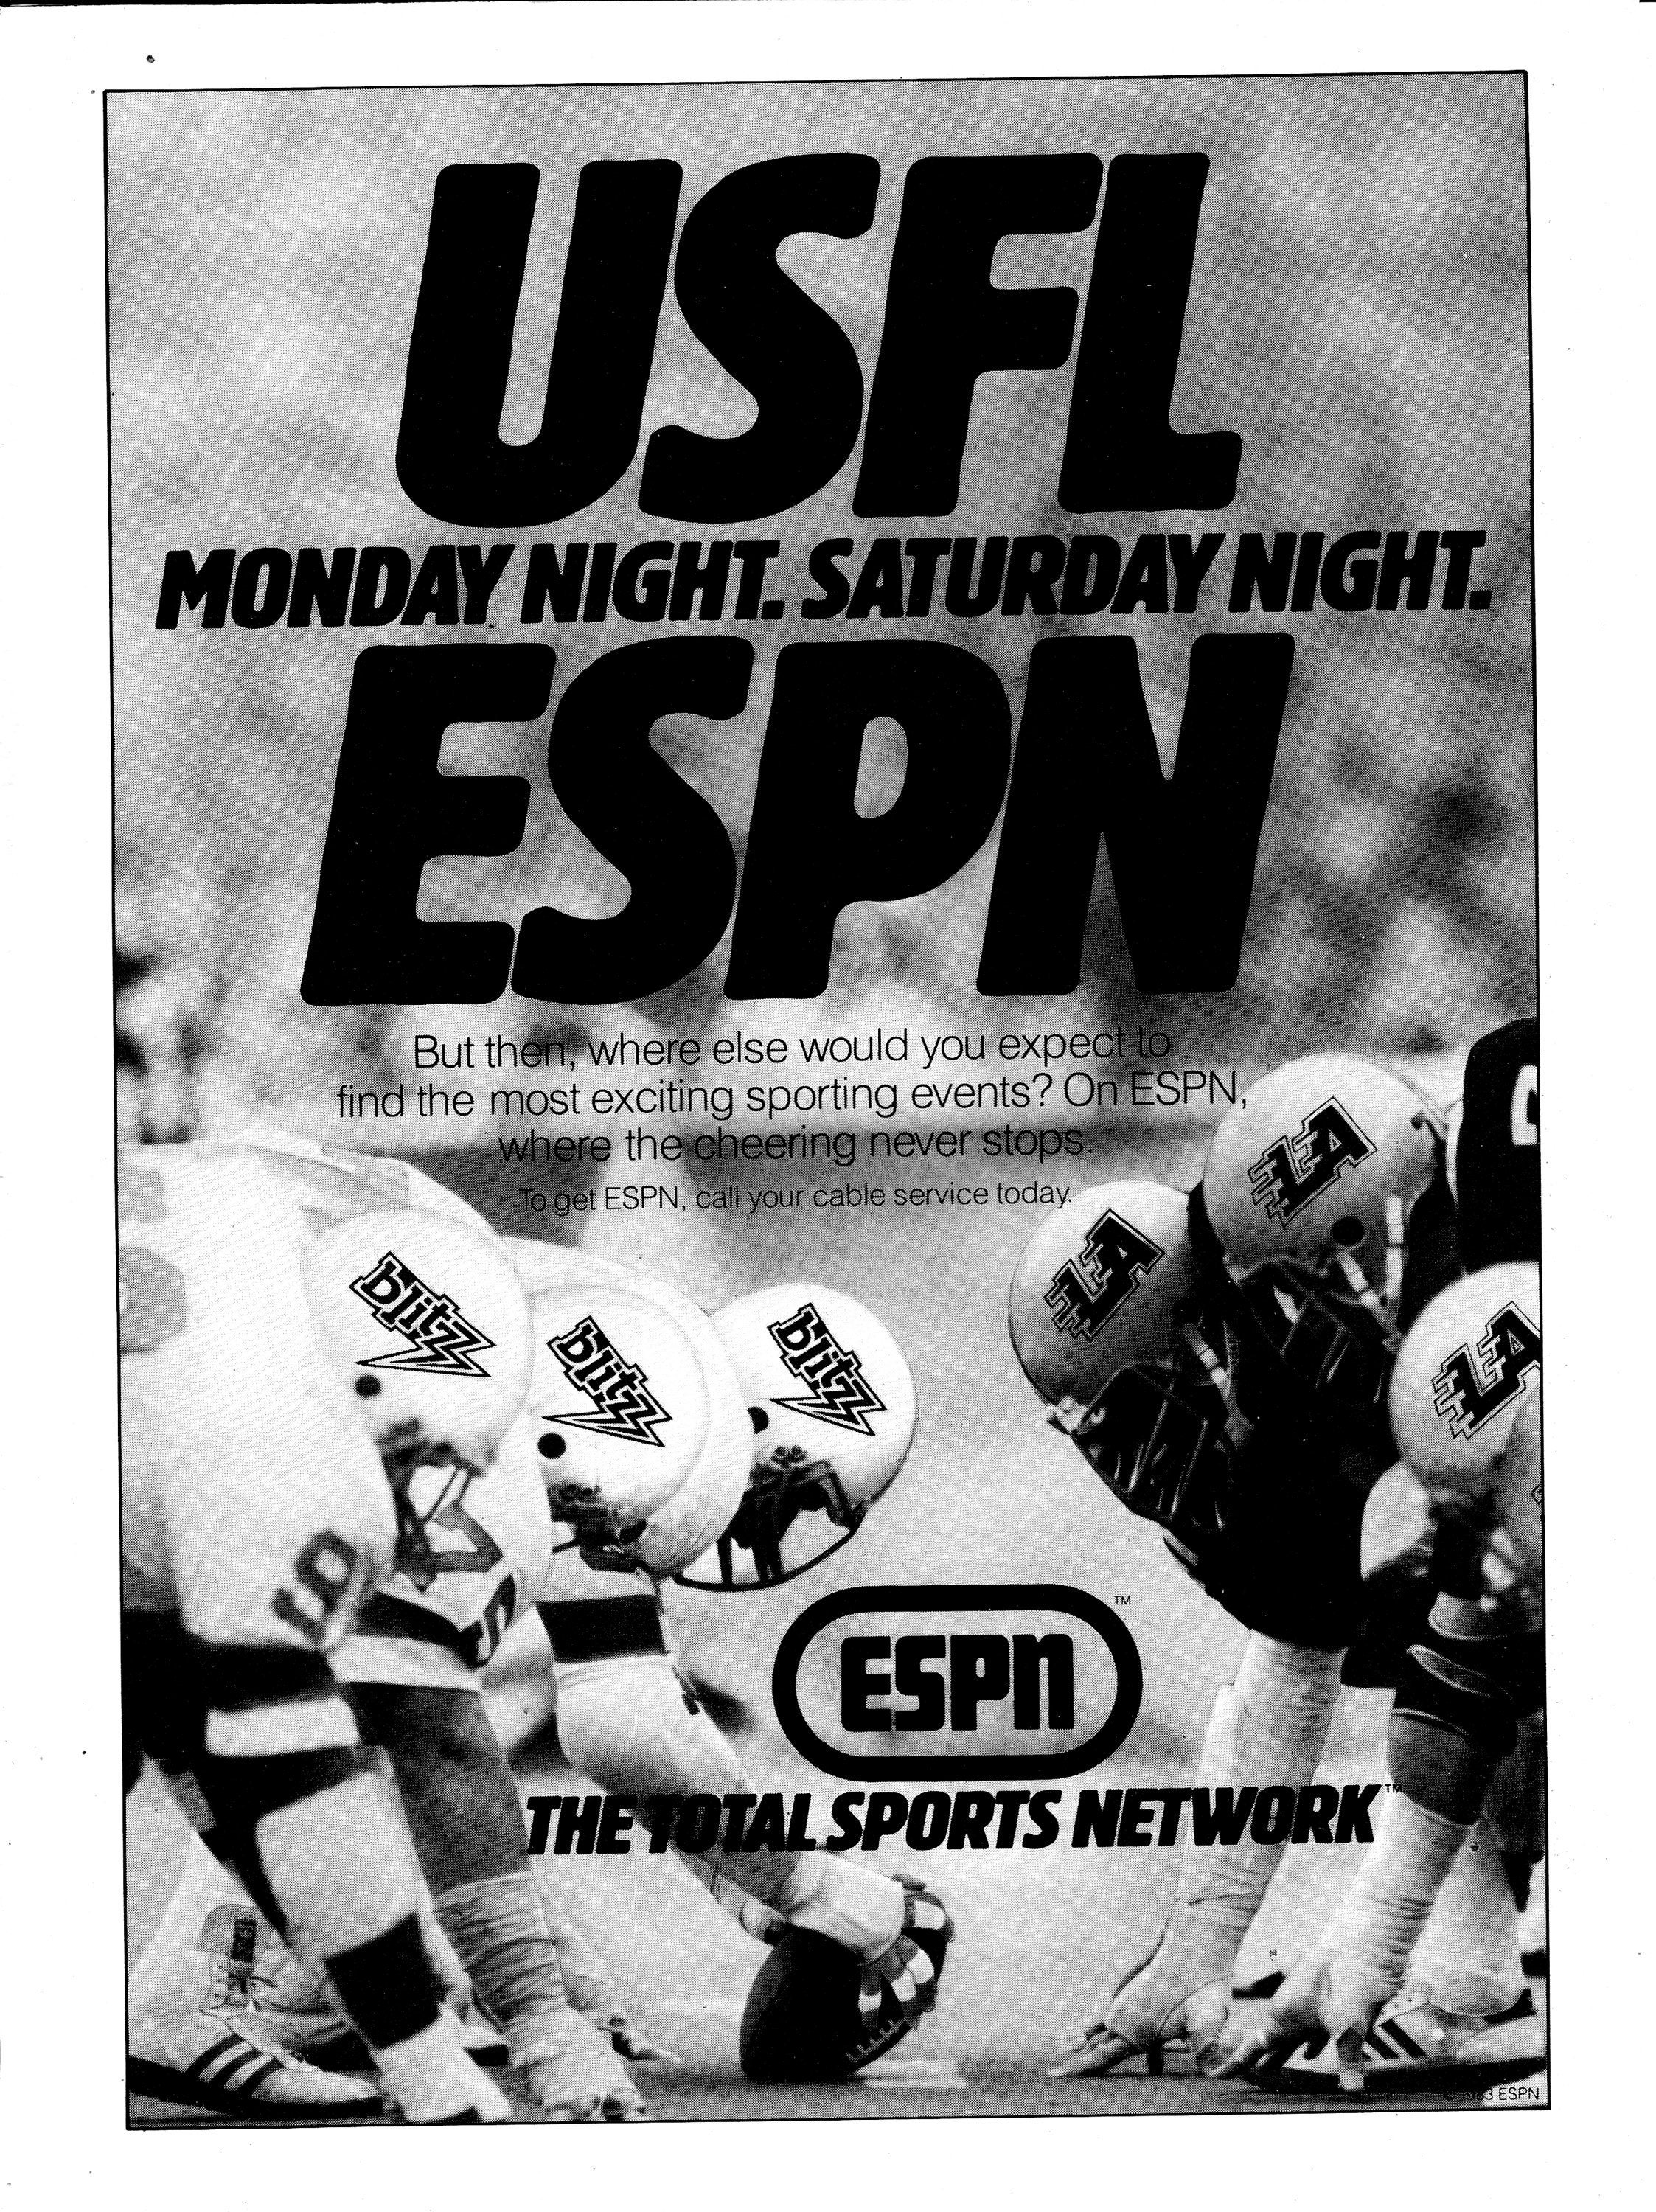 1983 USFL on ESPN Football Monday Saturday Night Original